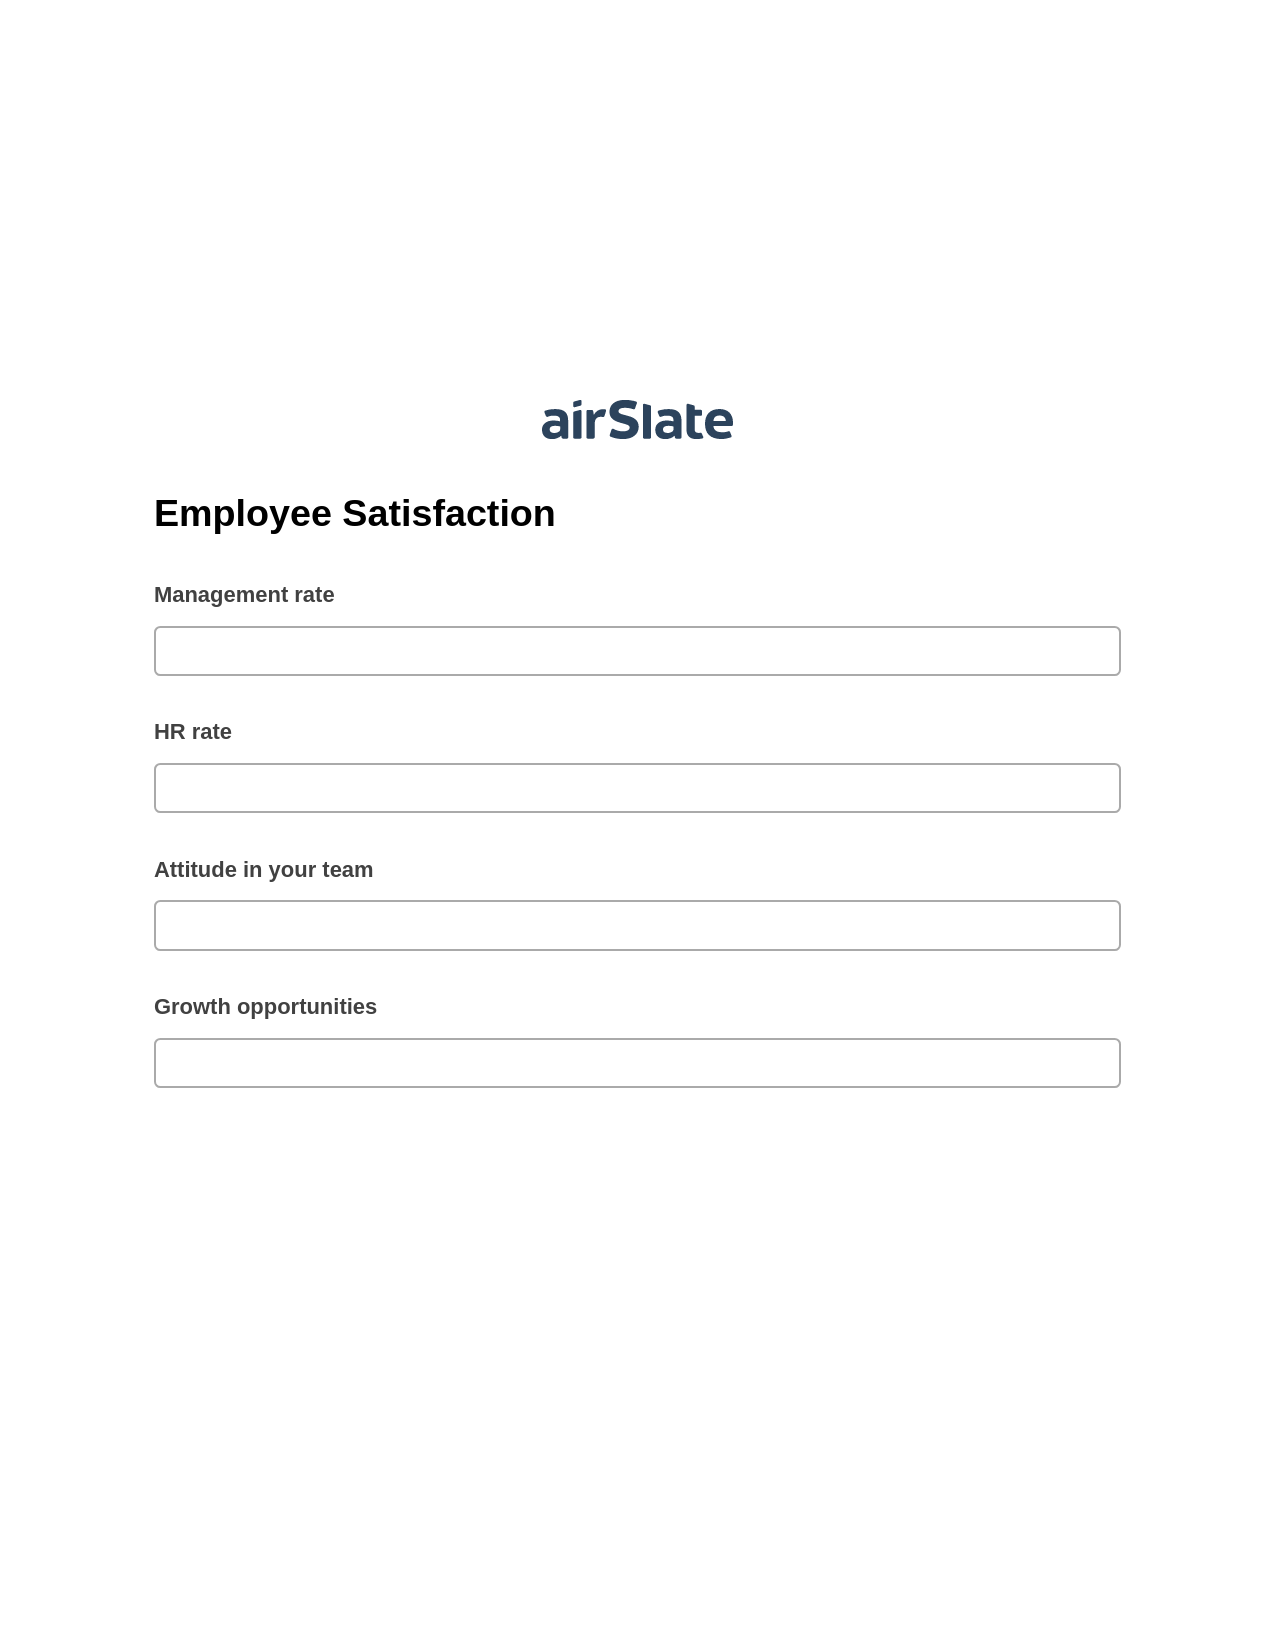 Employee Satisfaction Pre-fill from CSV File Bot, Reminder Bot, Dropbox Bot